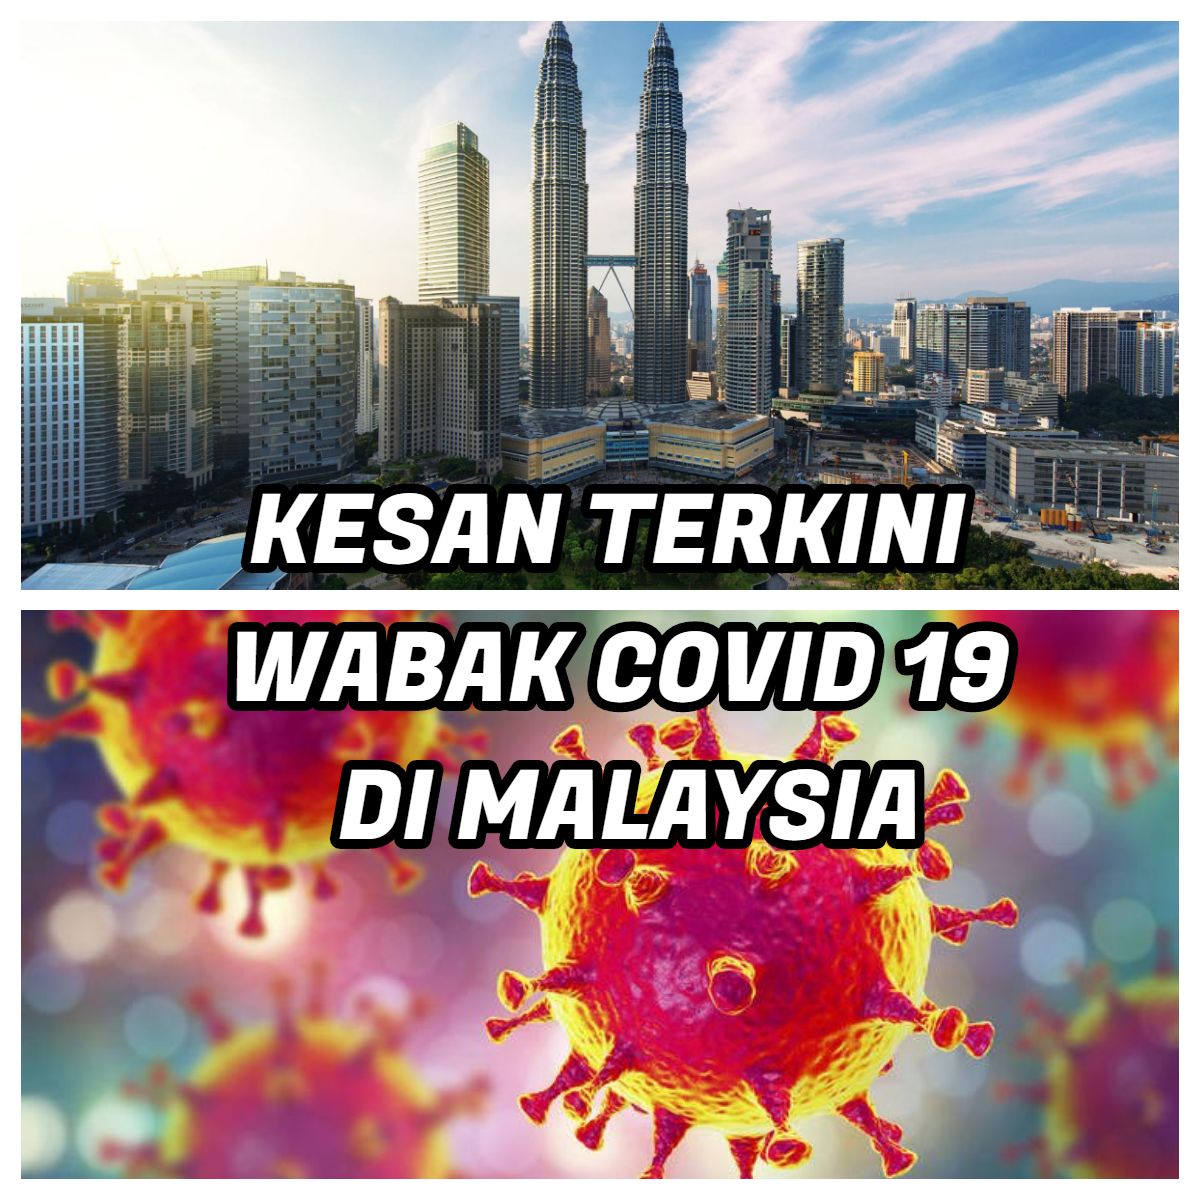 KESAN TERKINI WABAK COVID 19 DI MALAYSIA